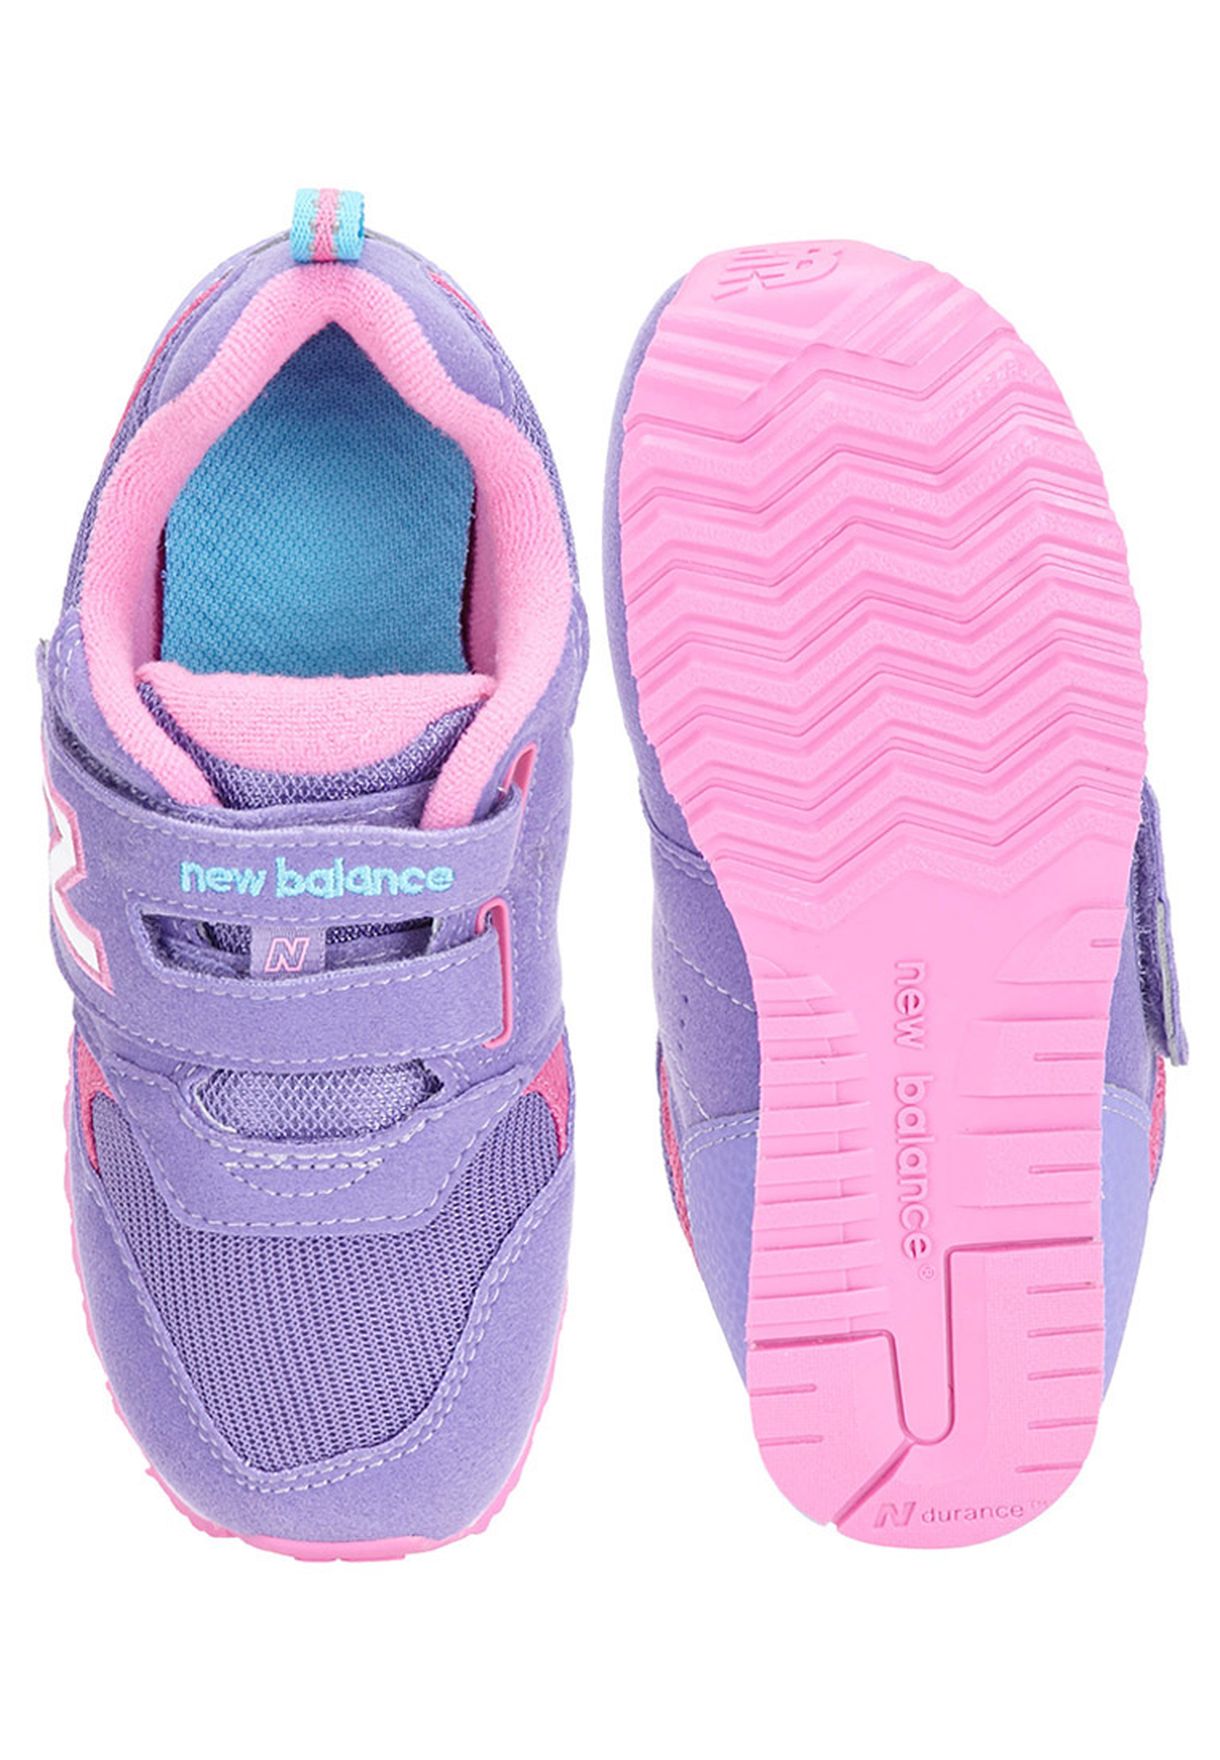 Alaska Logically Emotion Buy New Balance purple 312 Kids Sneakers for Kids in MENA, Worldwide